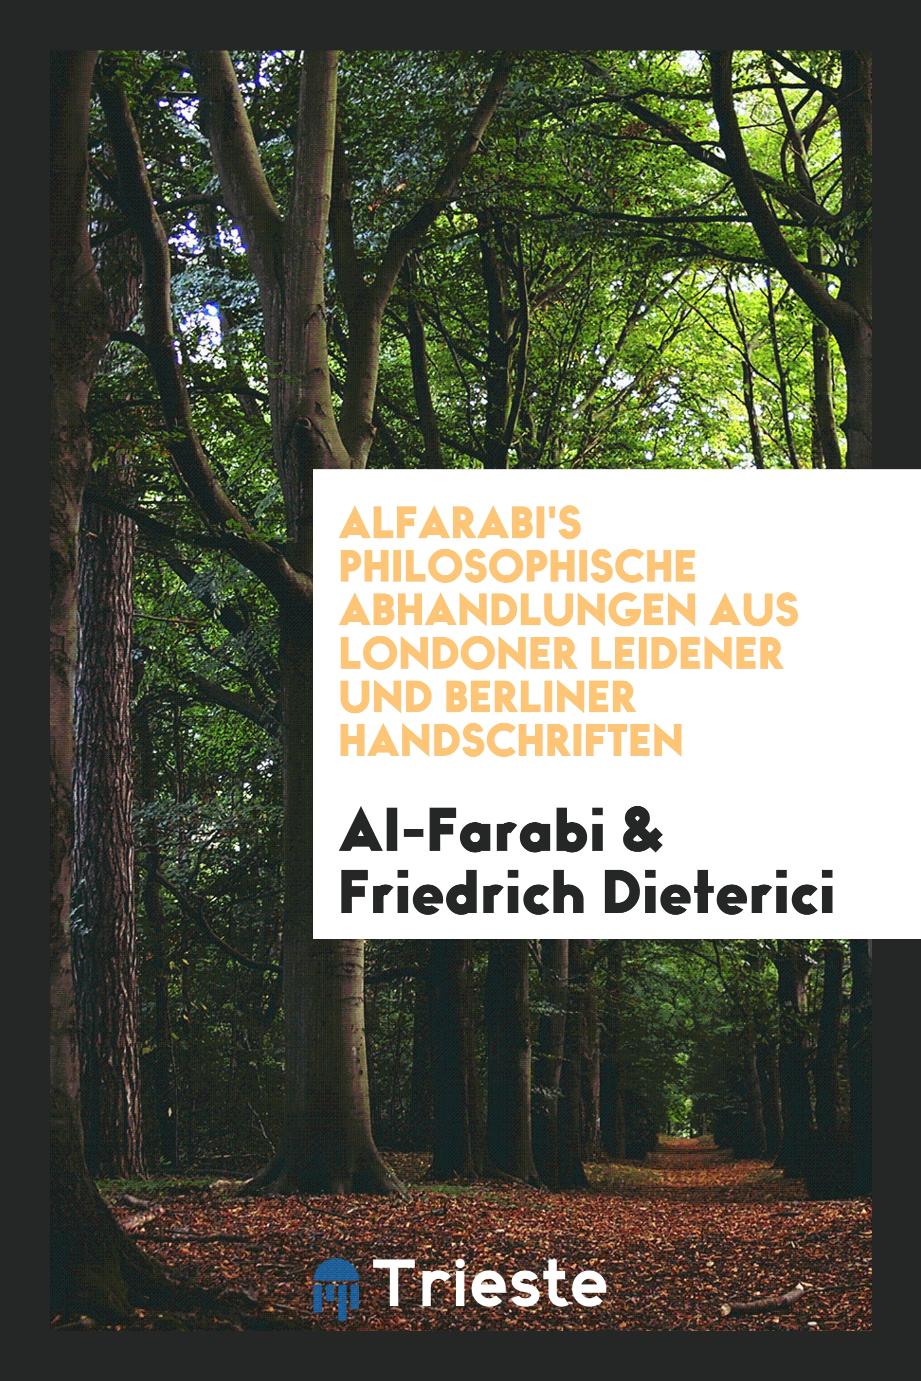 Alfarabi's philosophische Abhandlungen aus Londoner Leidener und Berliner Handschriften